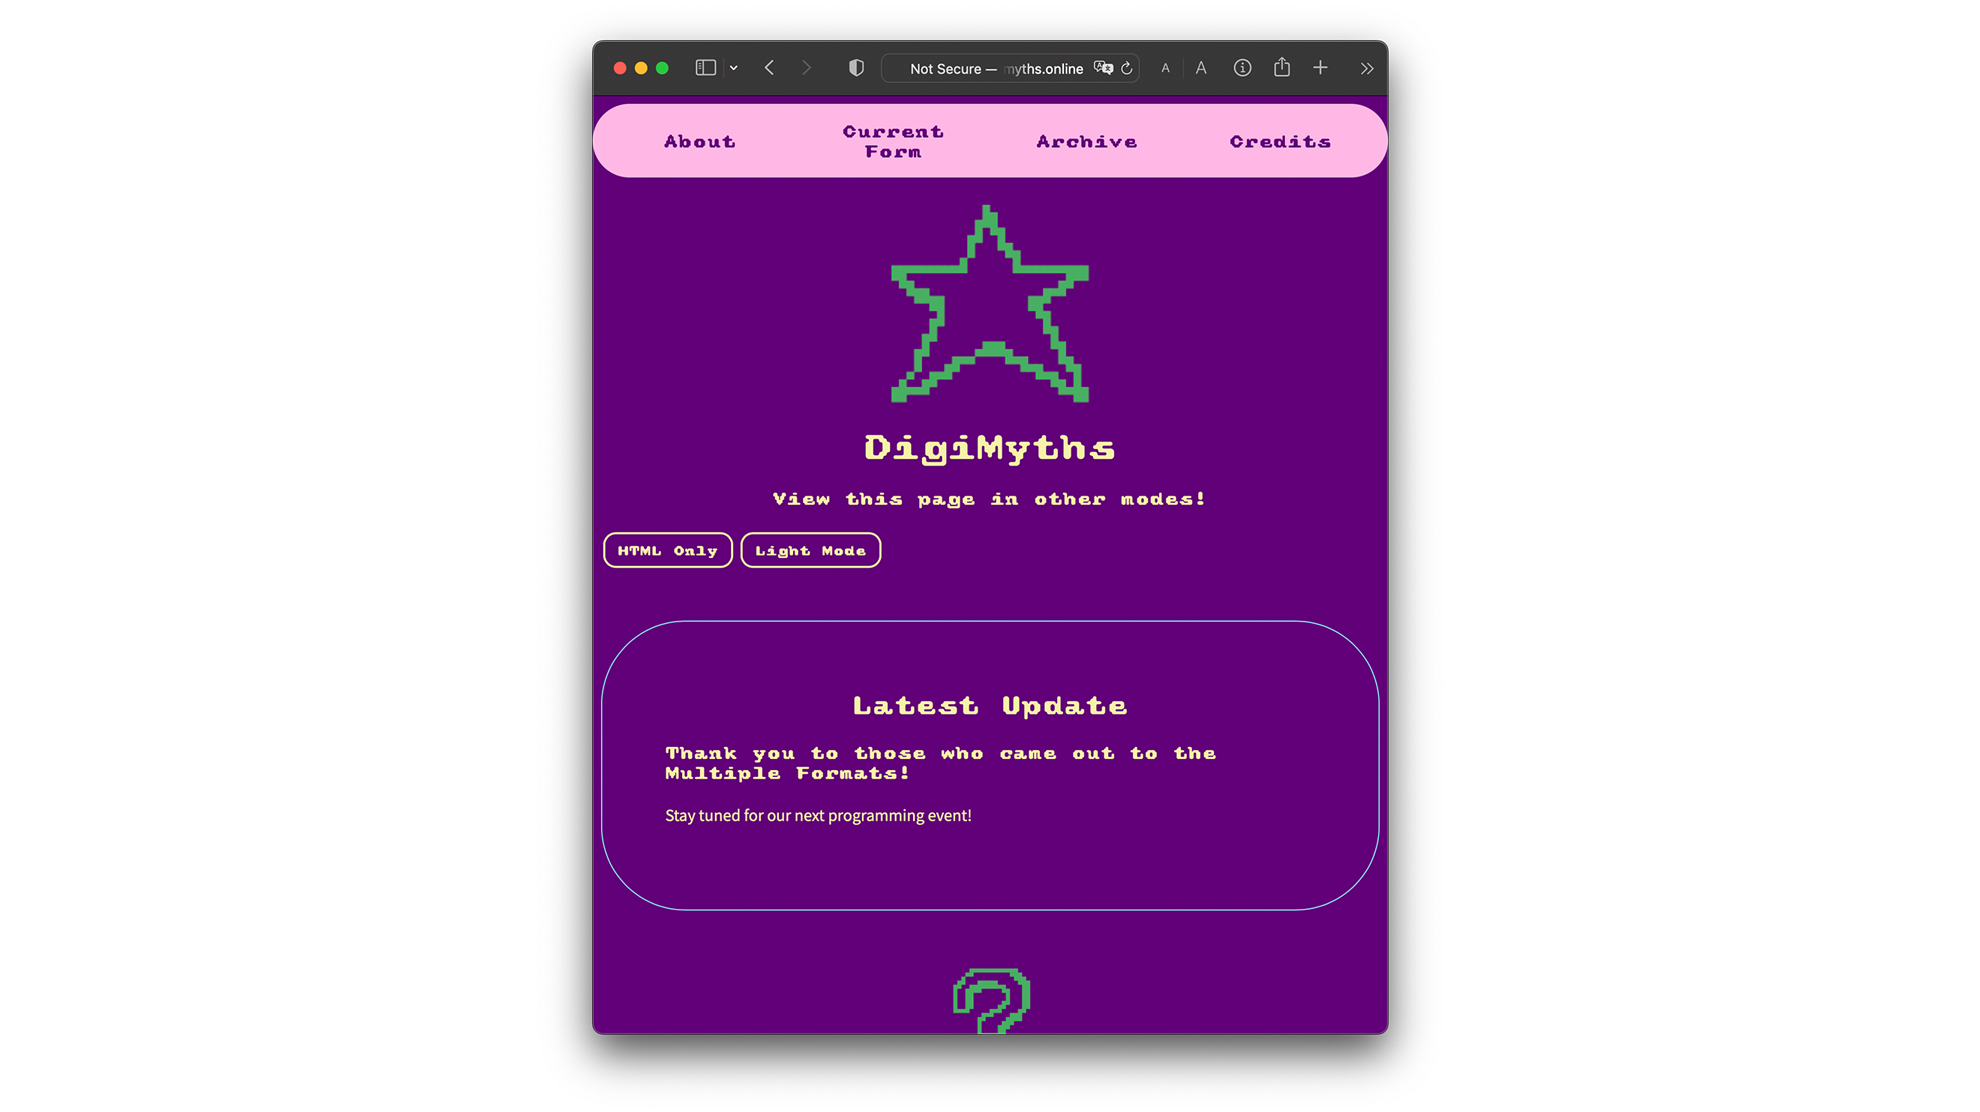 DigiMyths Website